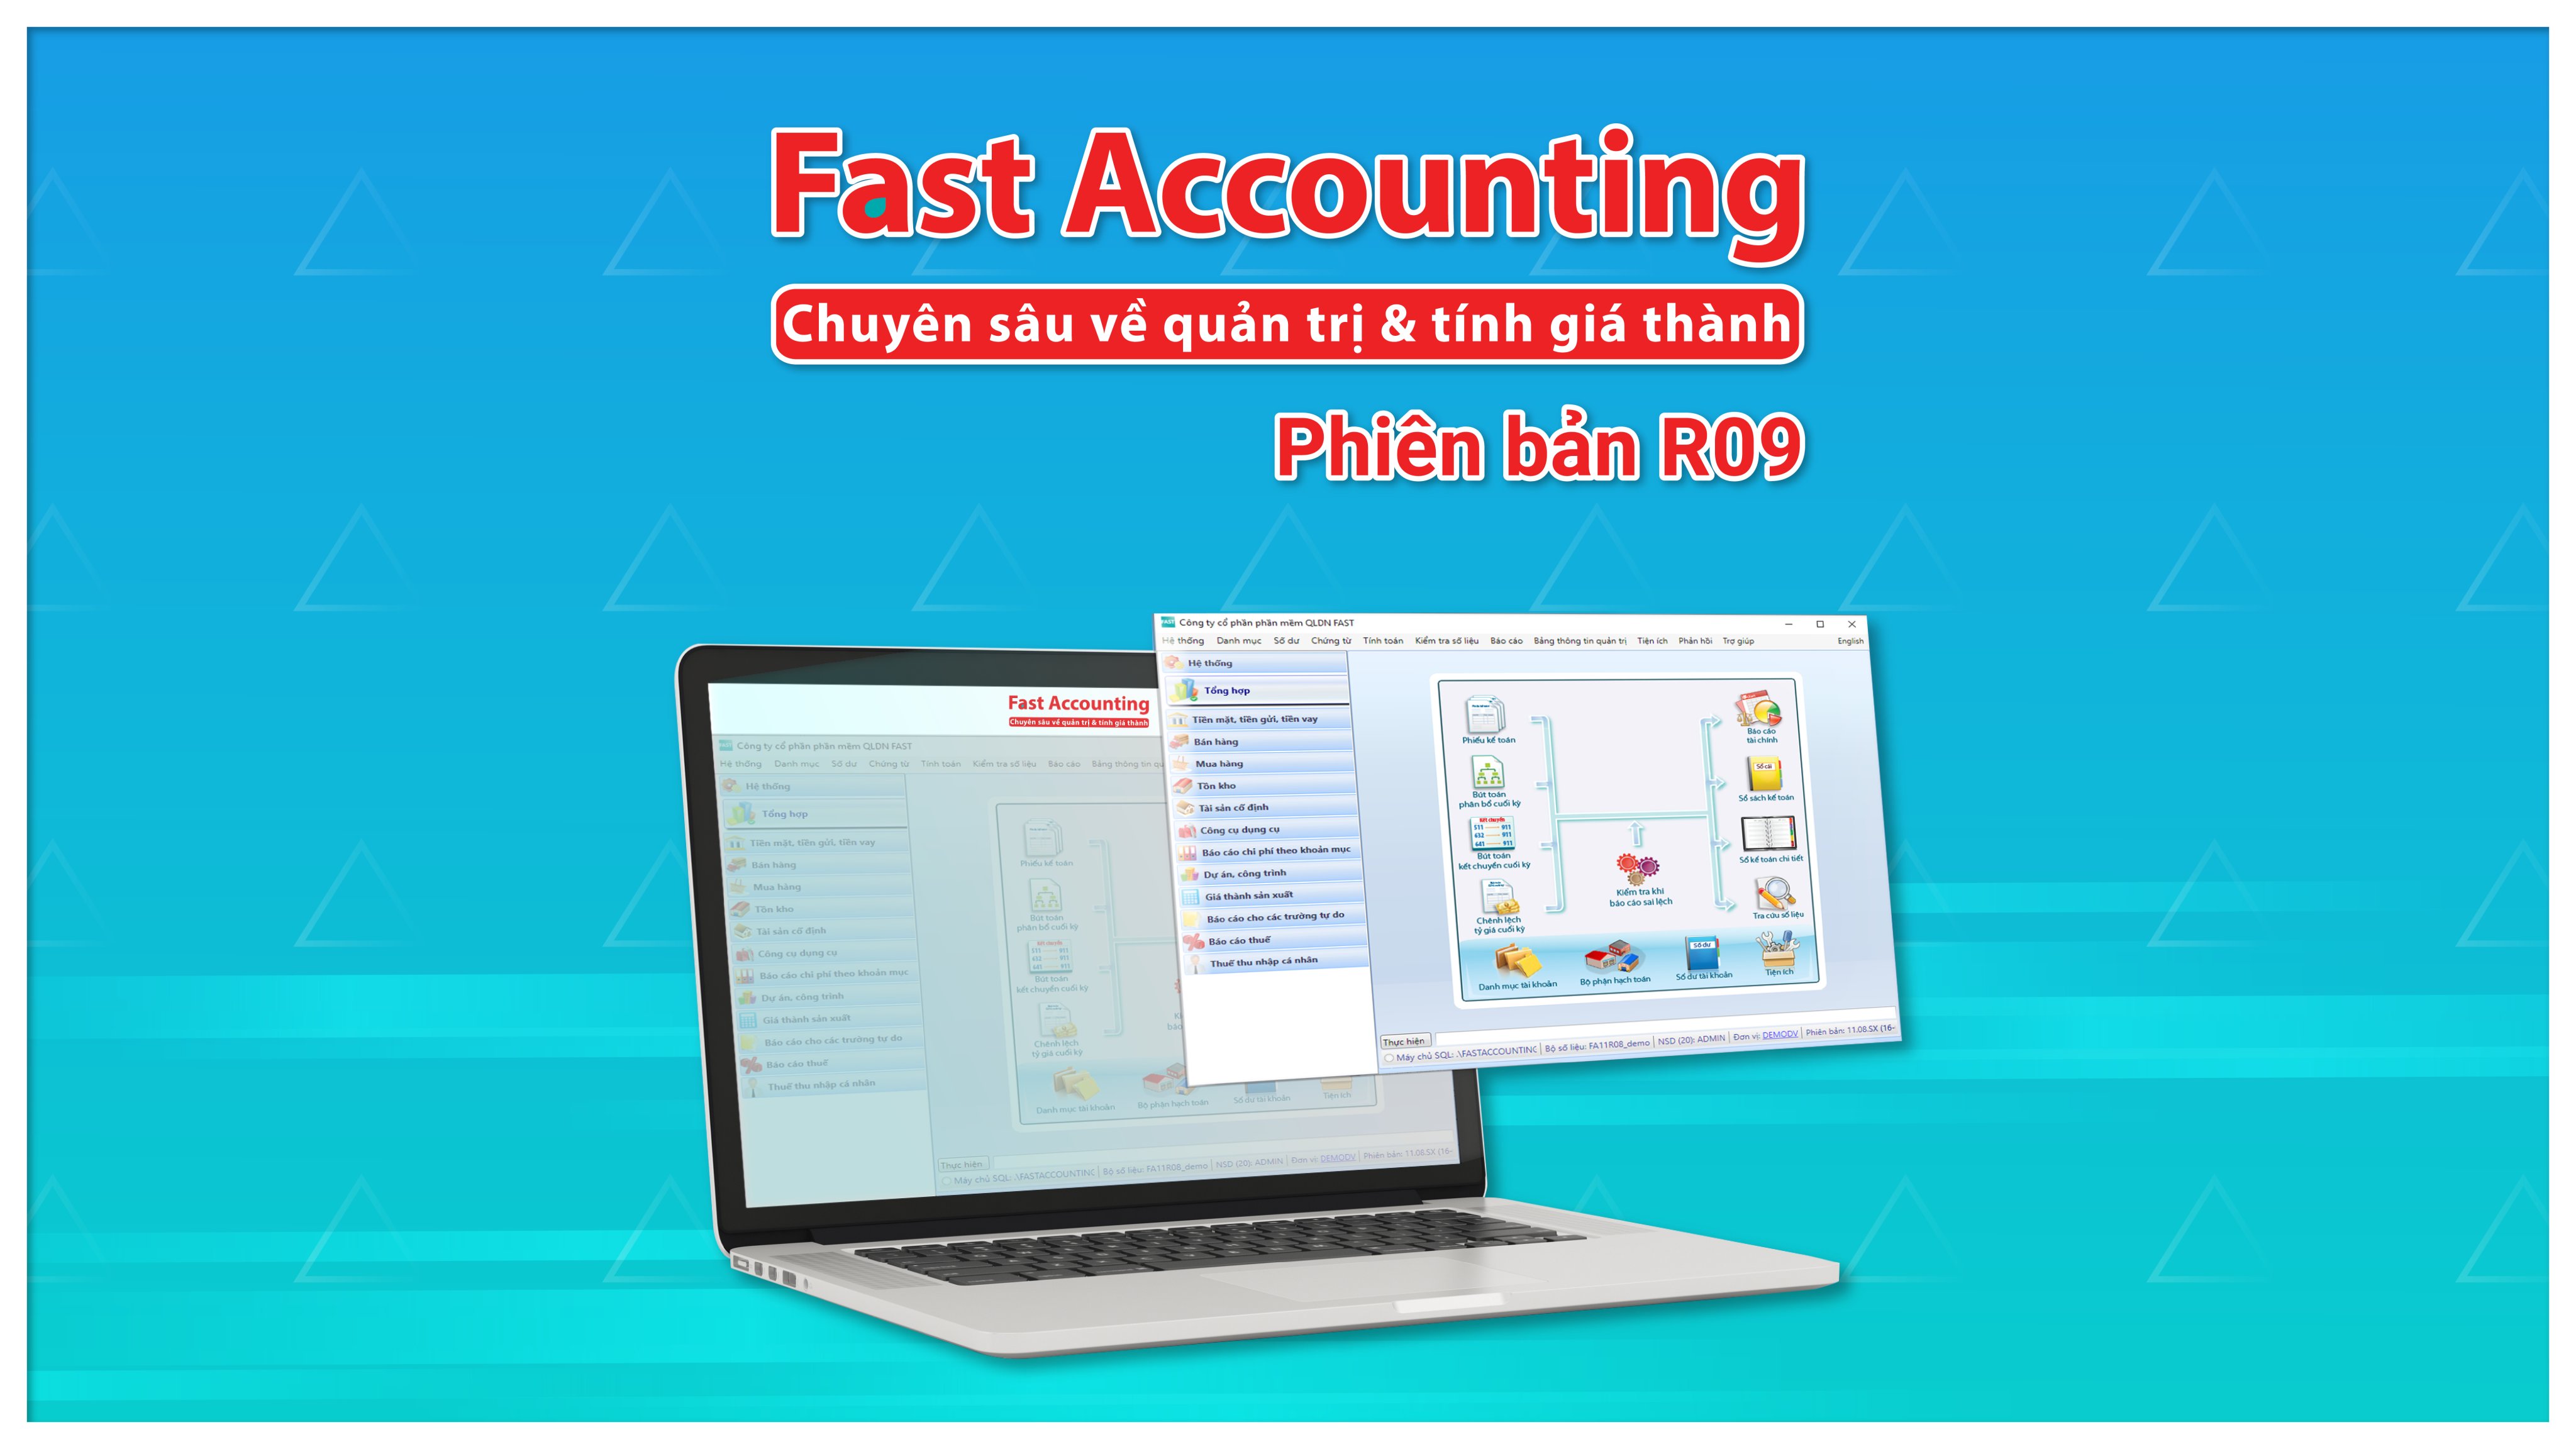 phien-ban-fast-accounting-11-R09.jpg